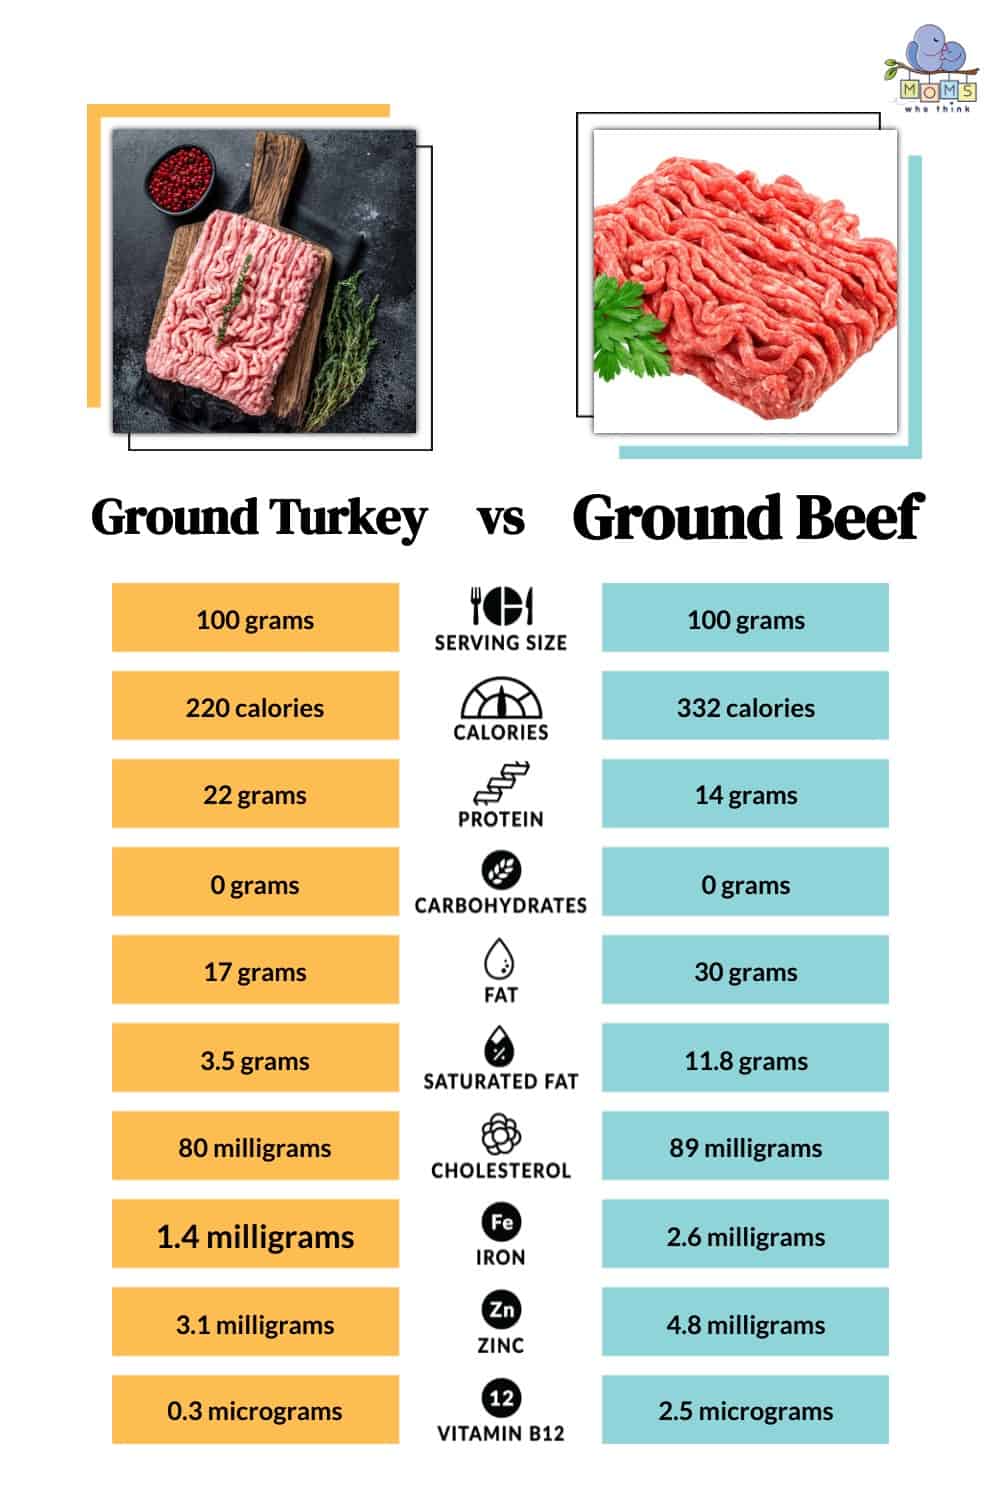 Ground Turkey vs Ground Beef Nutritional Facts